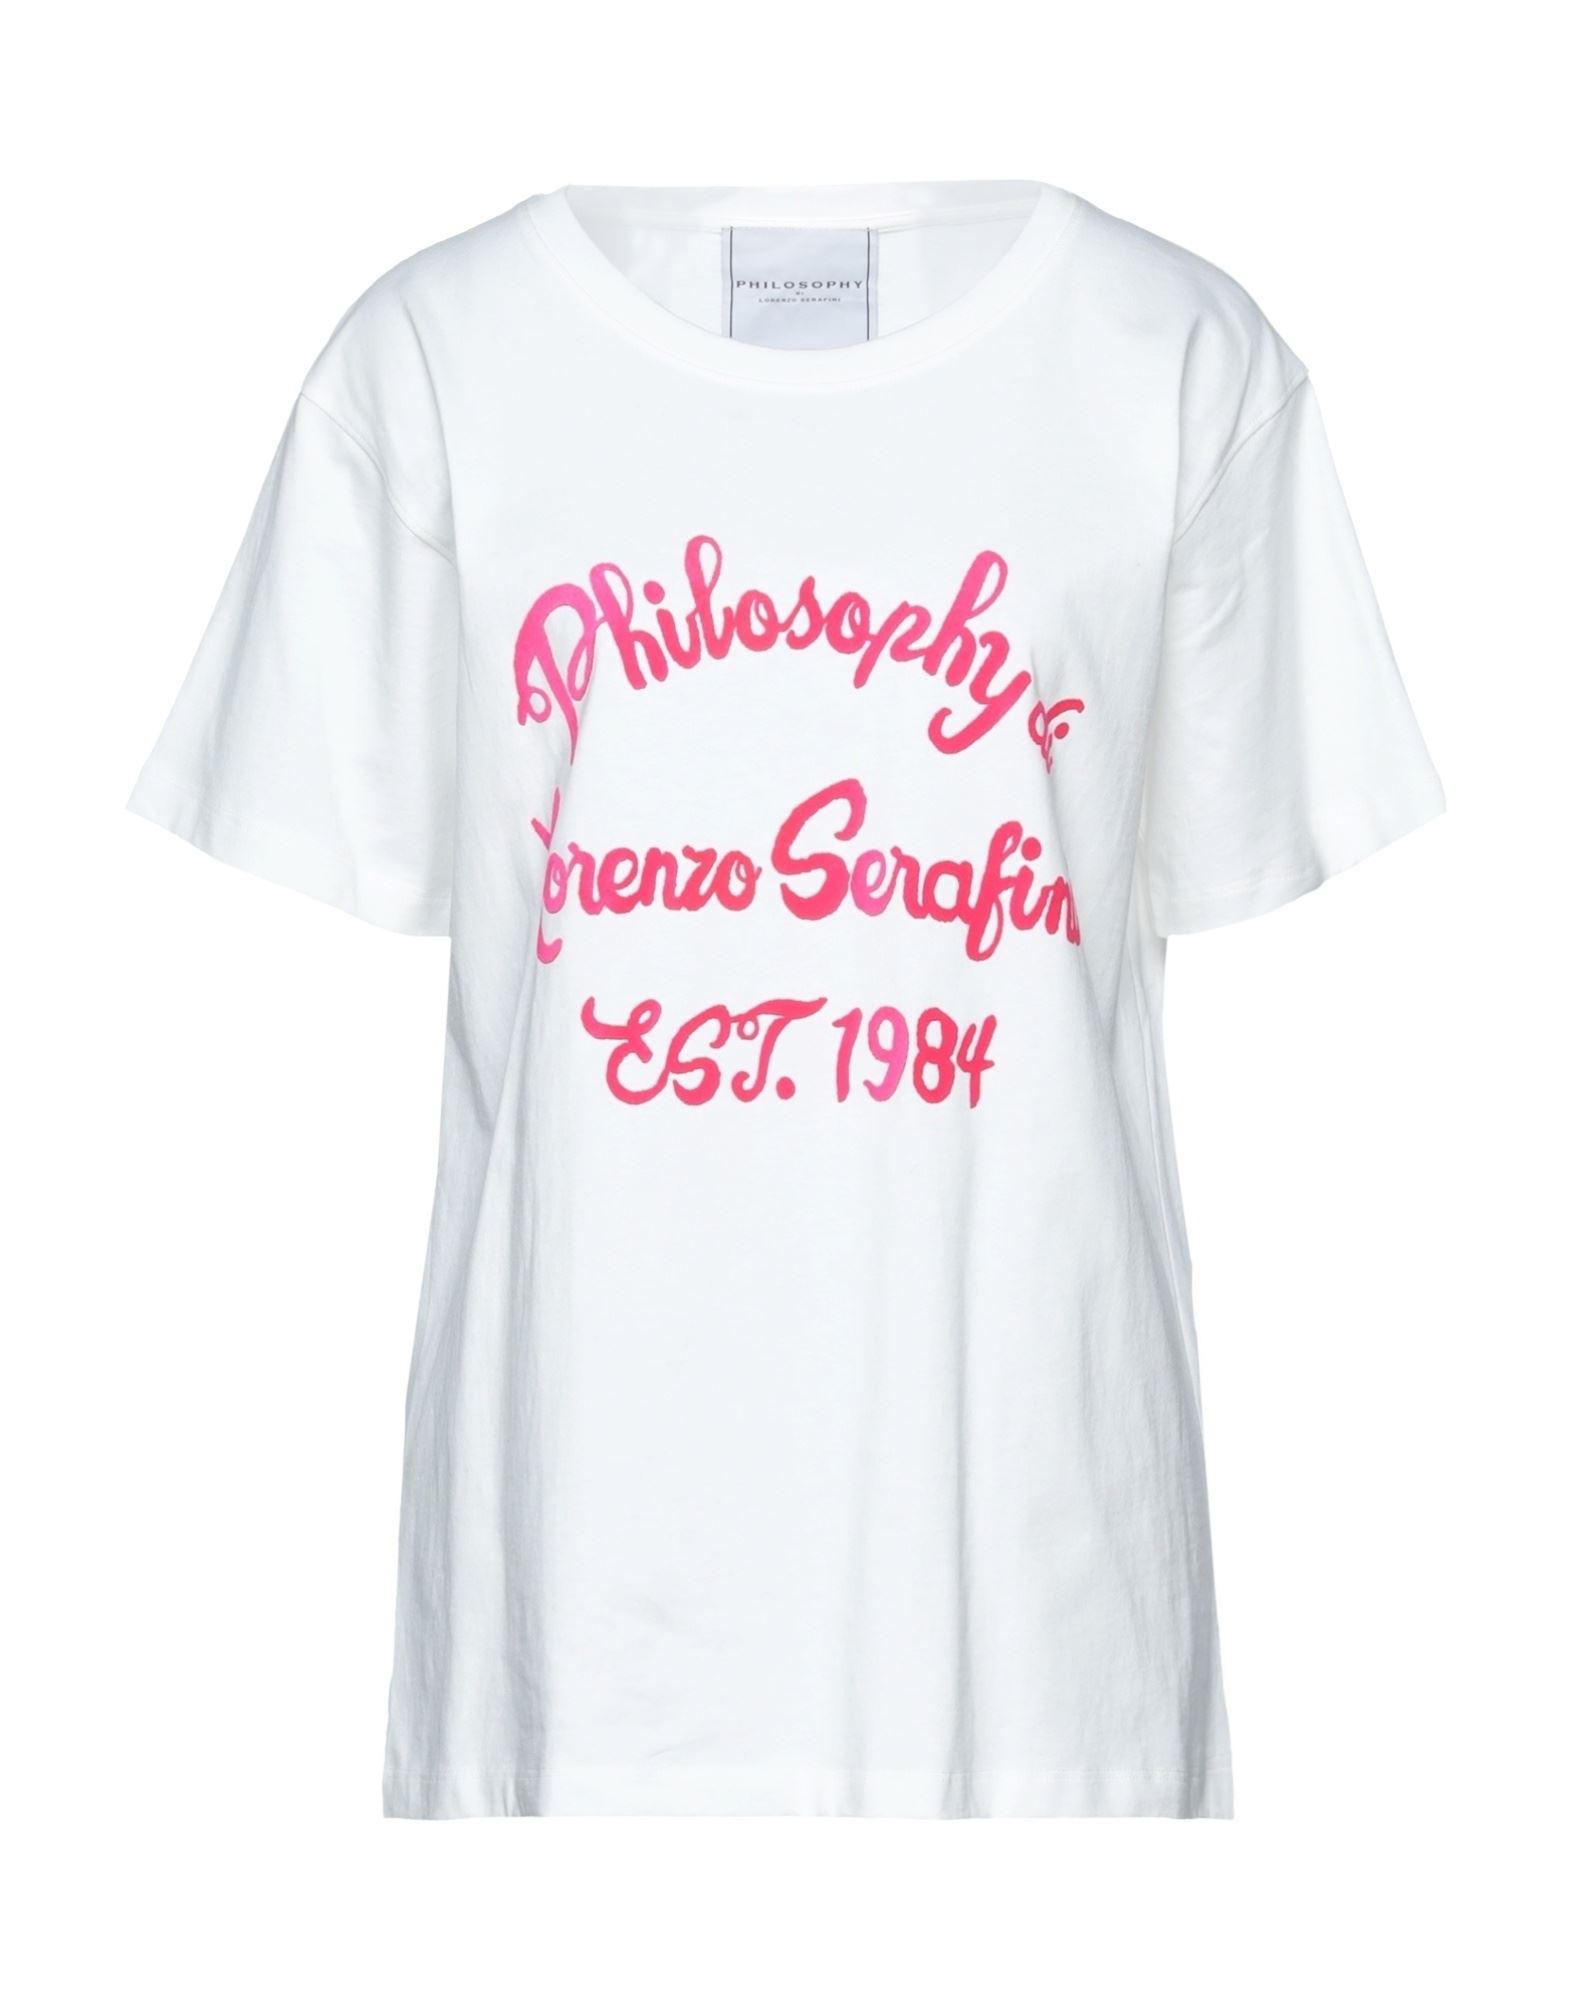 Philosophy Di Lorenzo Serafini T-shirts In White